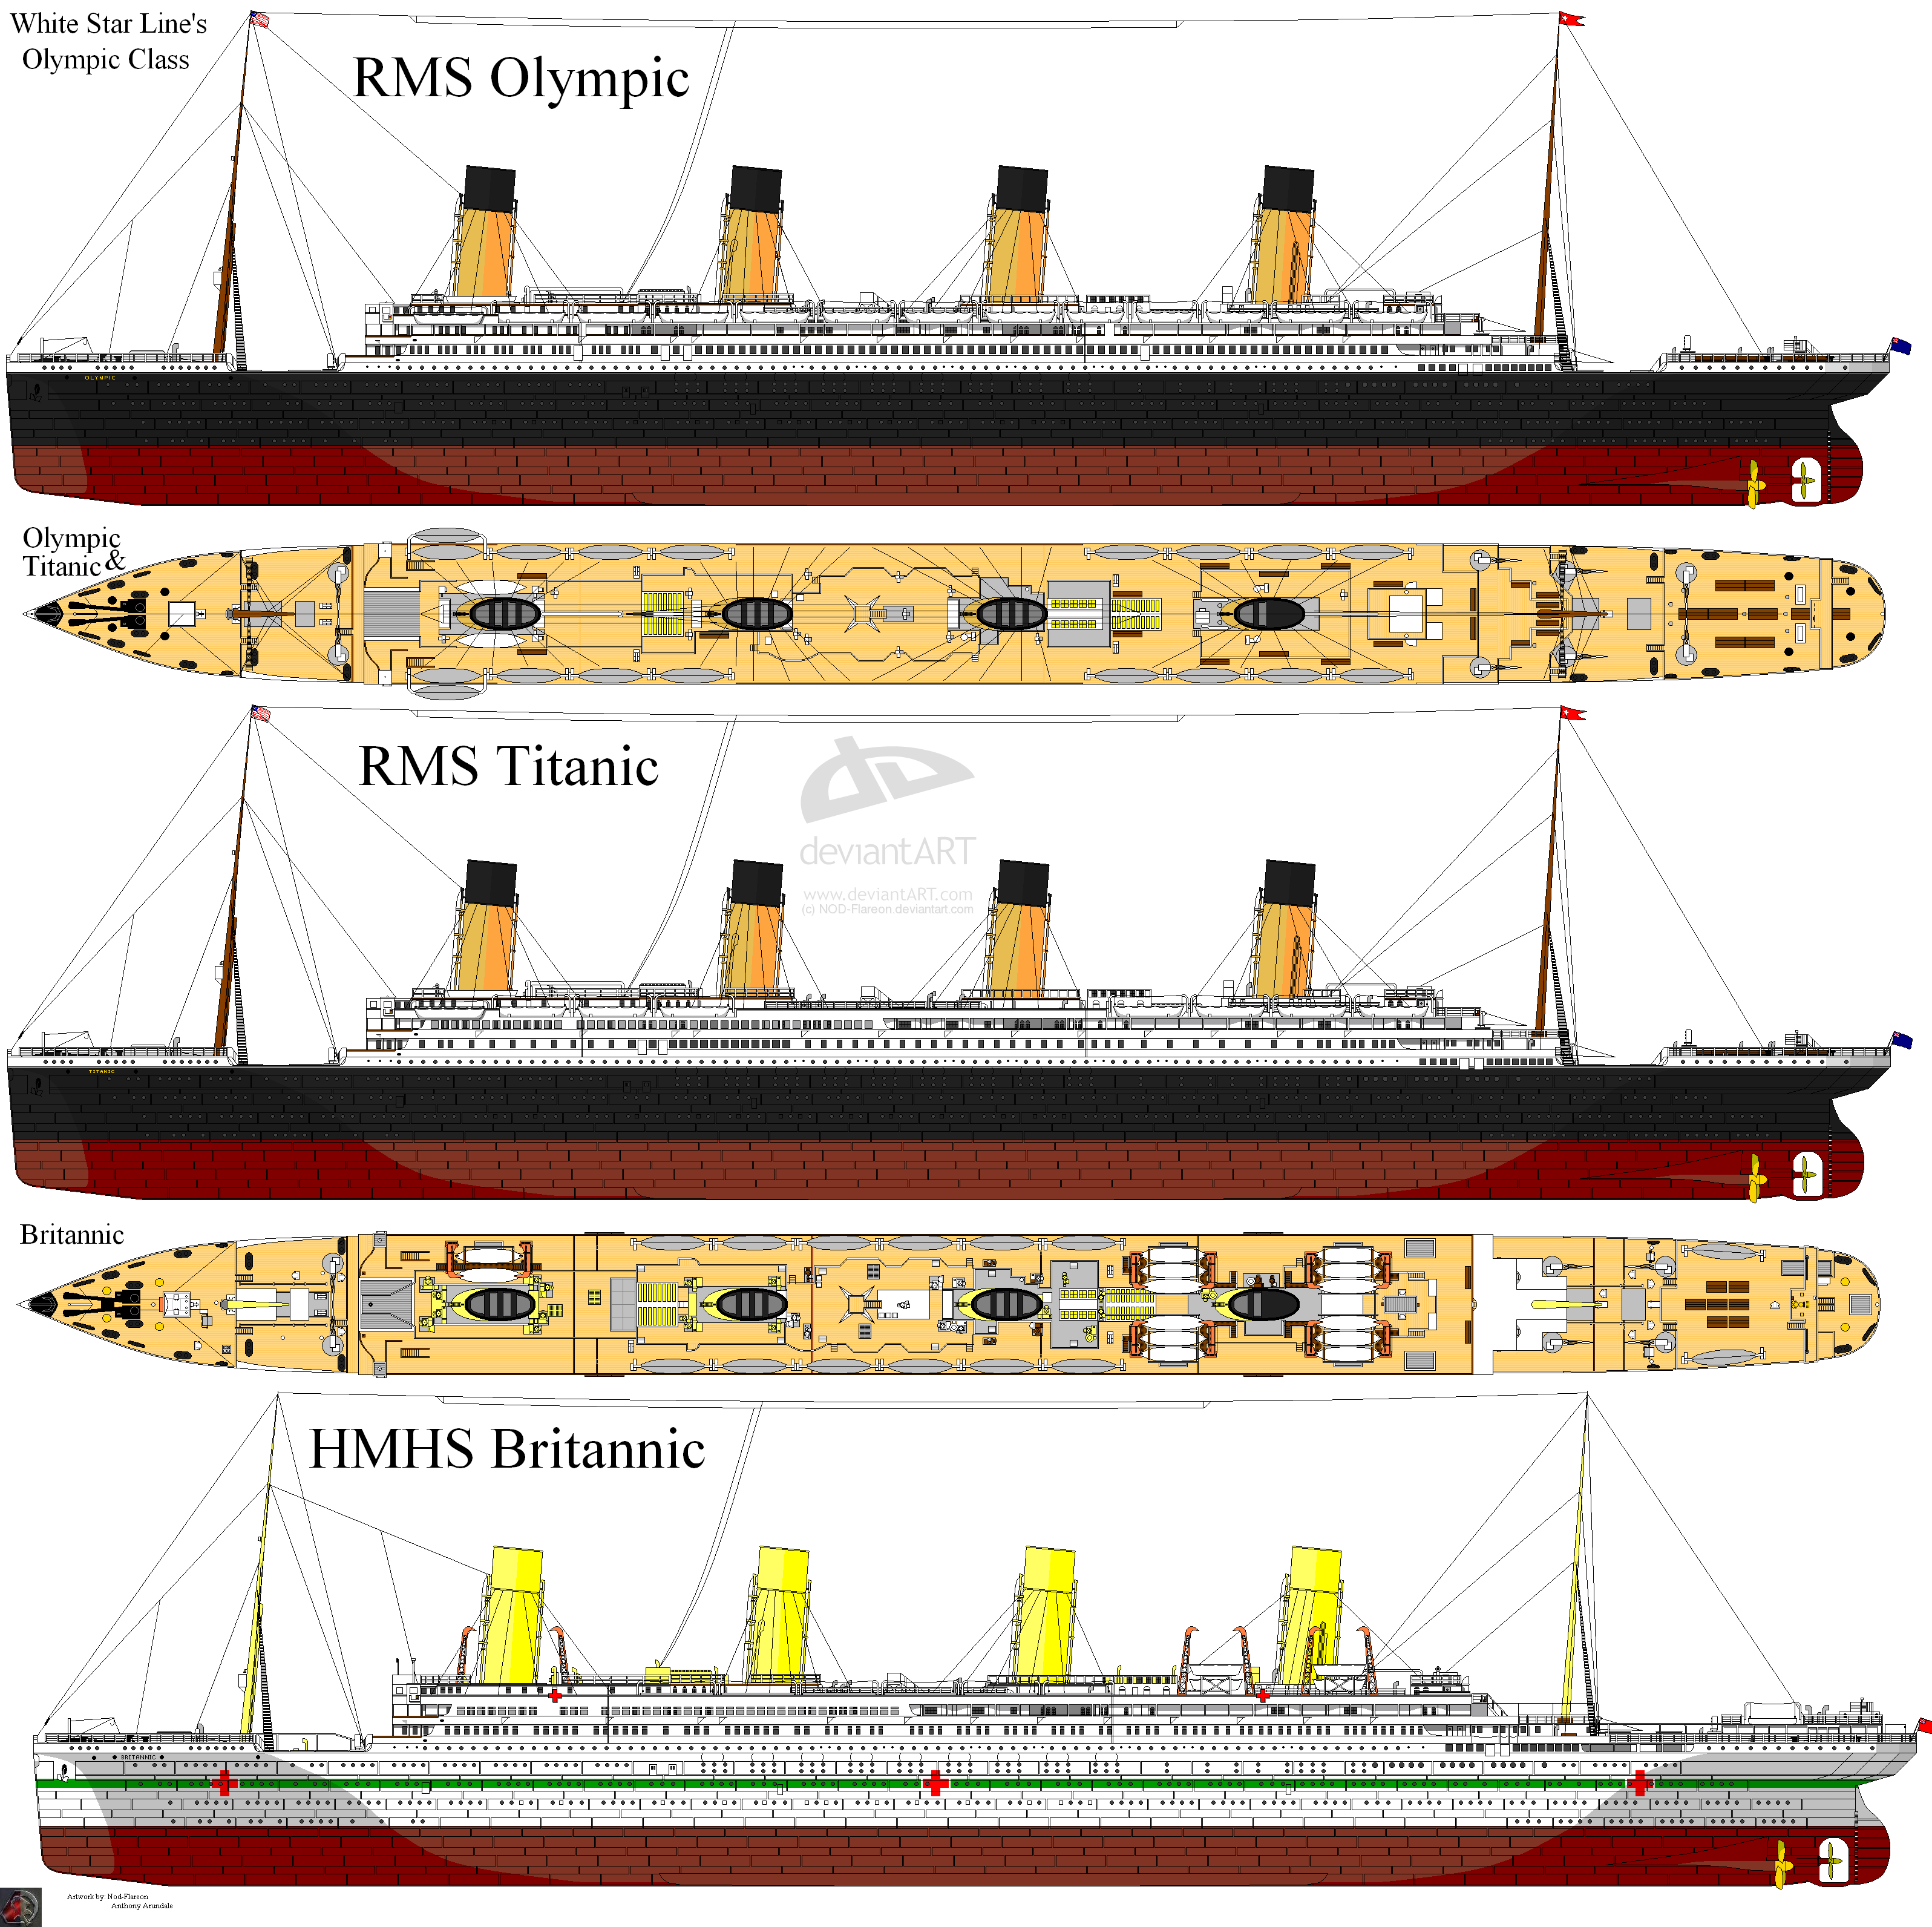 Размер парохода. Олимпик Титаник Британик Лузитания. 3 Корабля Титаник Британик Олимпик. Титаник и Британик и Лузитания. Британик схема корабля.